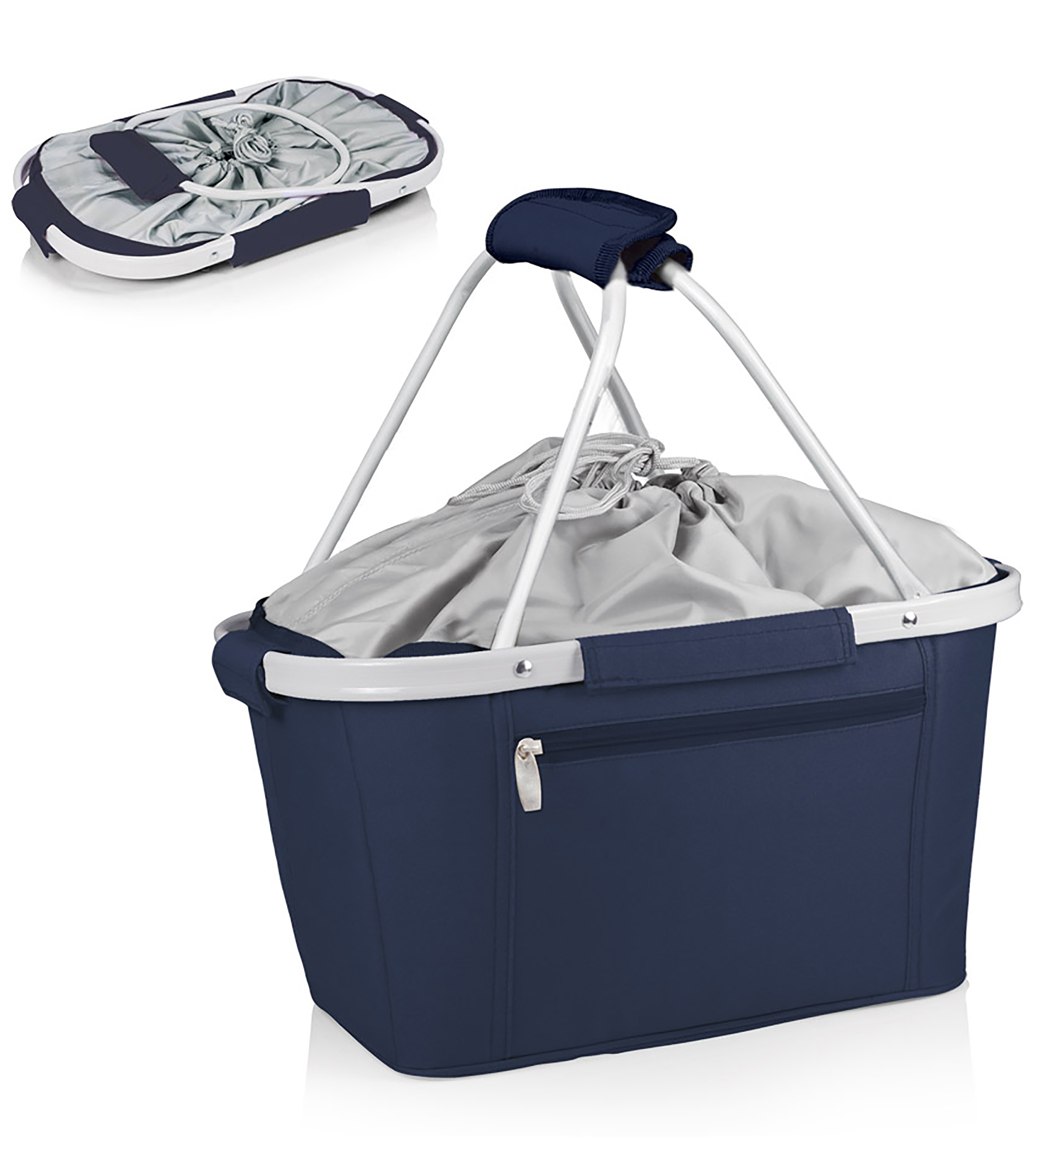 Picnic Time Metro Fashion Prints Cooler Basket - Navy - Swimoutlet.com